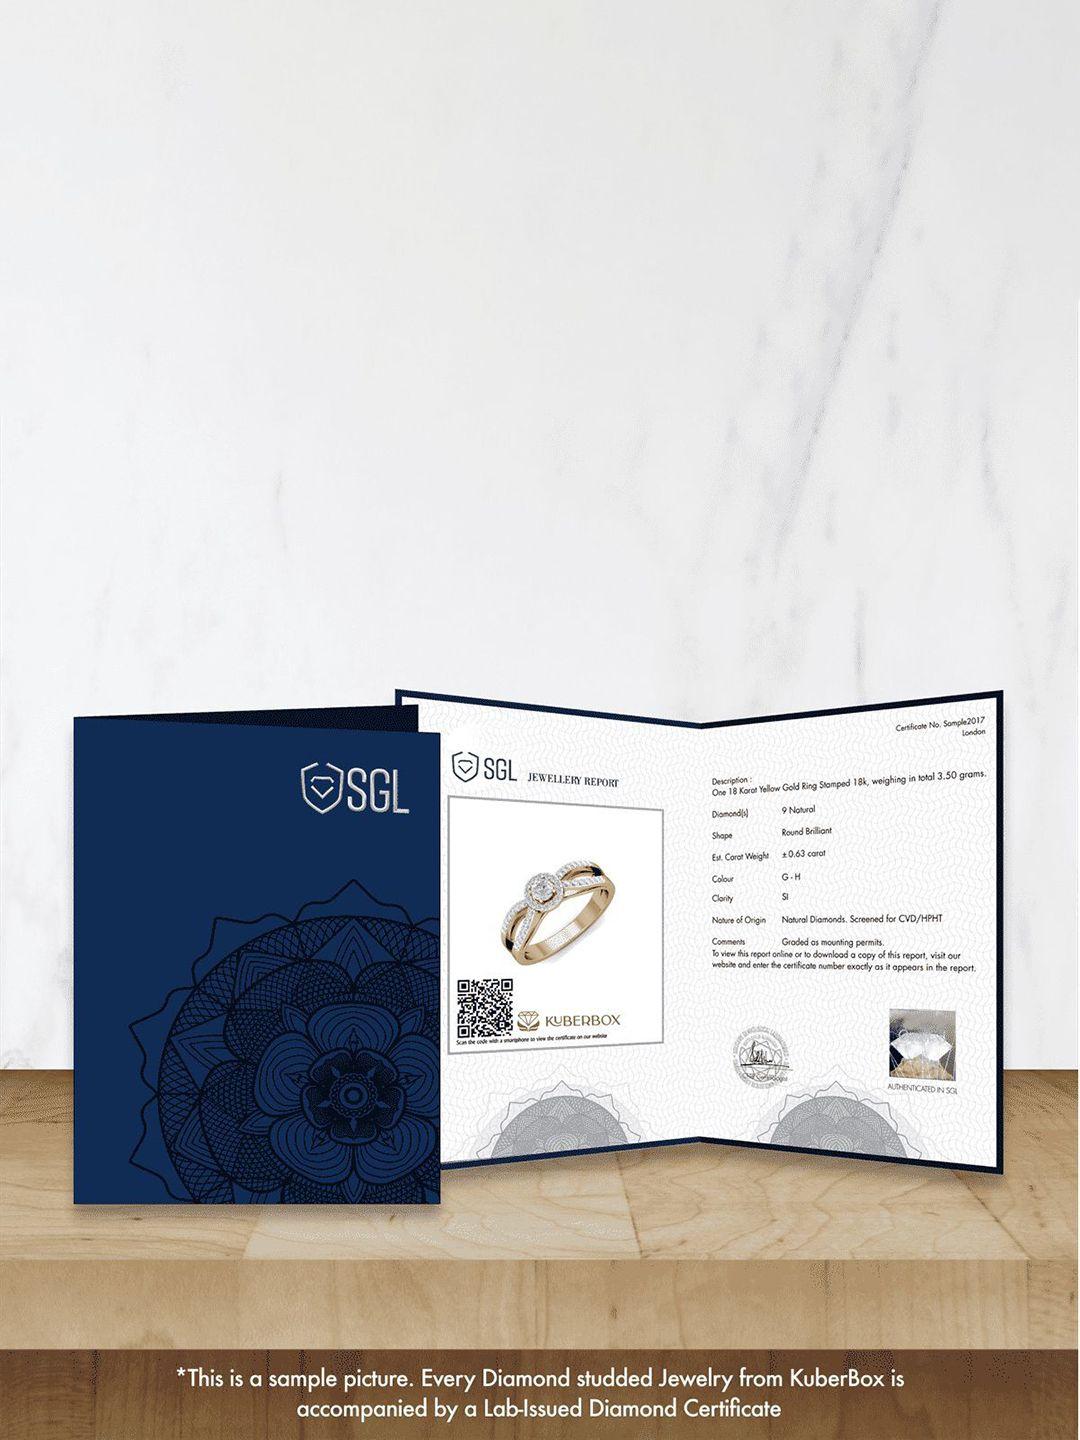 kuberbox romanza heart 18kt gold diamond studded finger ring- 2.64gm